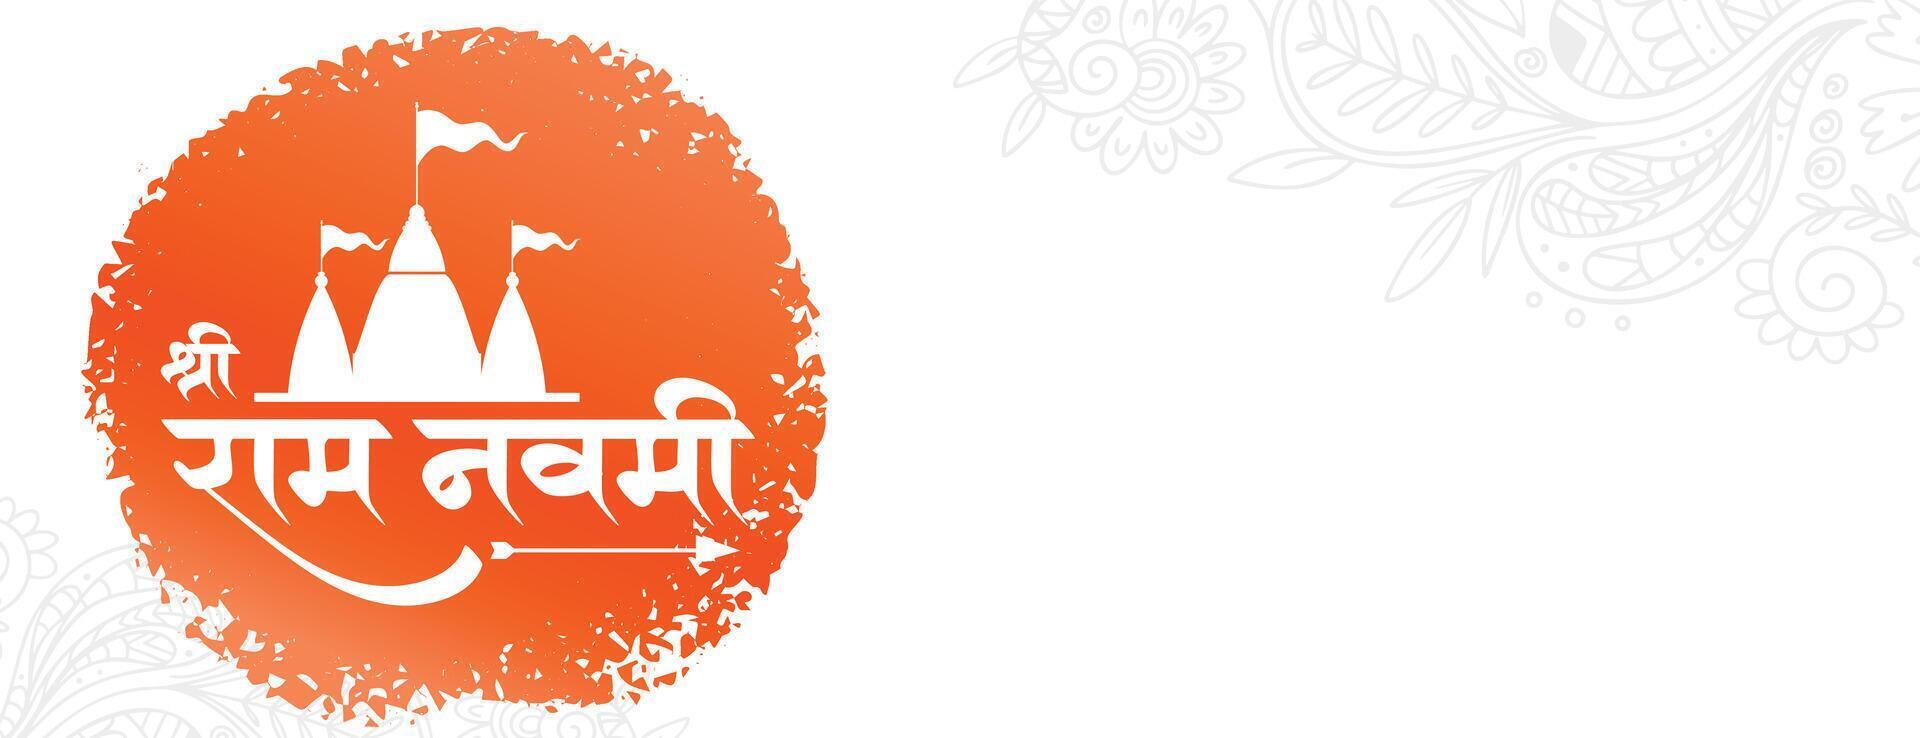 Hindu festlich Shree RAM Navami religiös Hintergrund im grungy Stil vektor